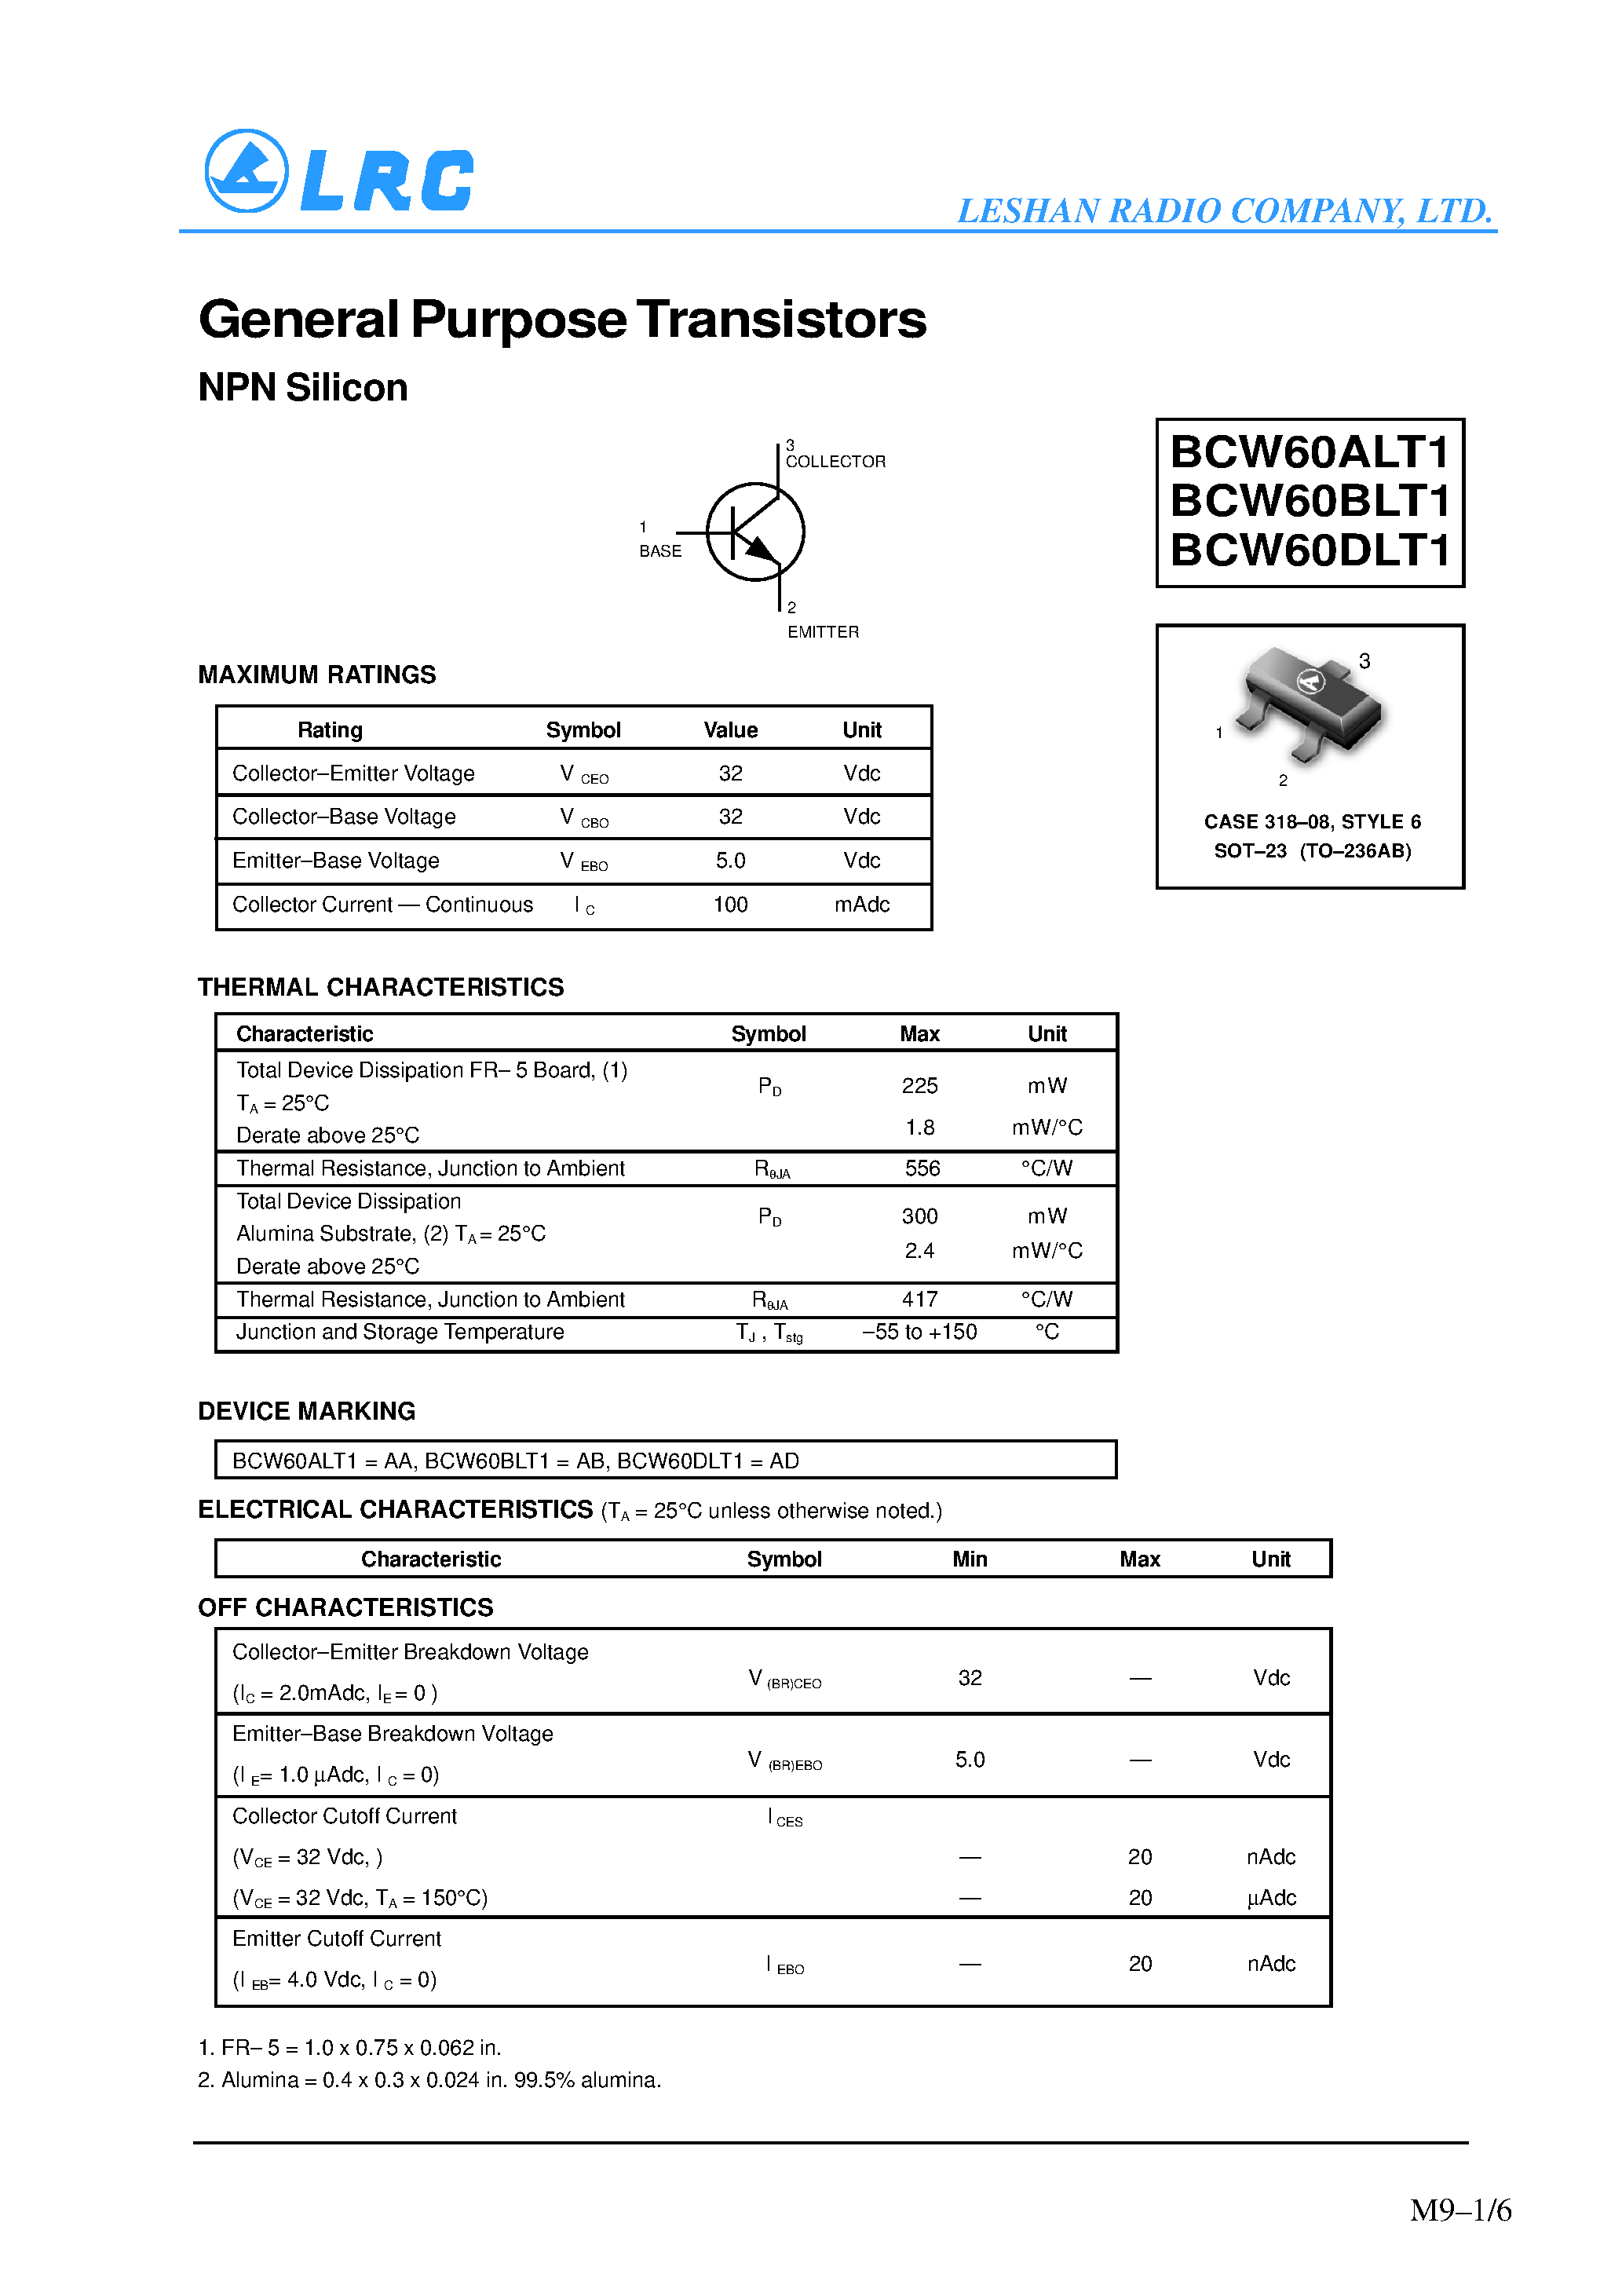 Datasheet BCWDLT1 - General Purpose Transistors(NPN Silicon) page 1